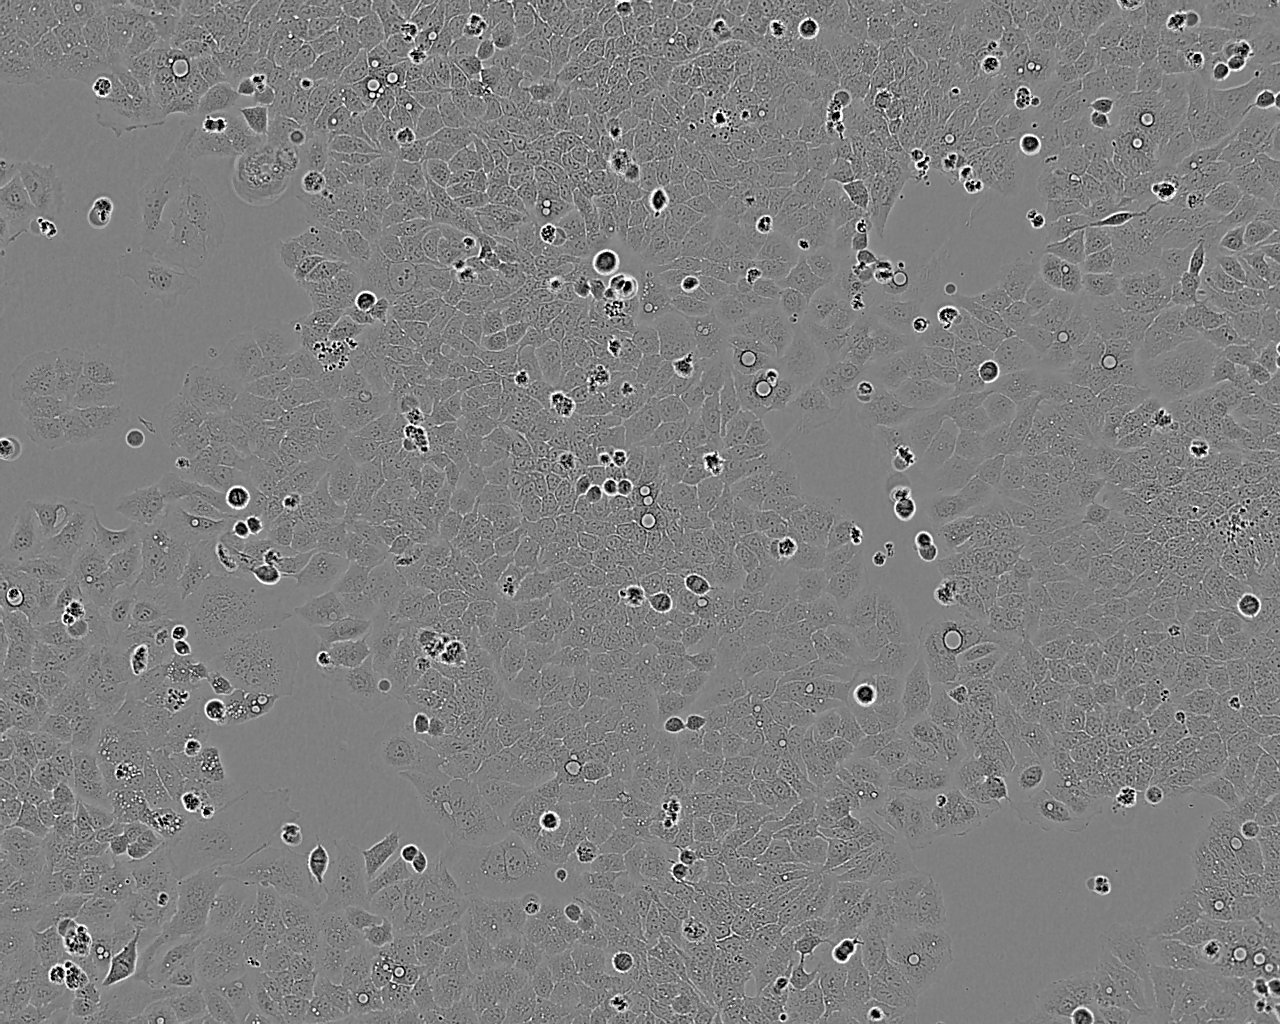 GB-1 Cell:人脑胶质母细胞瘤细胞系,GB-1 Cell